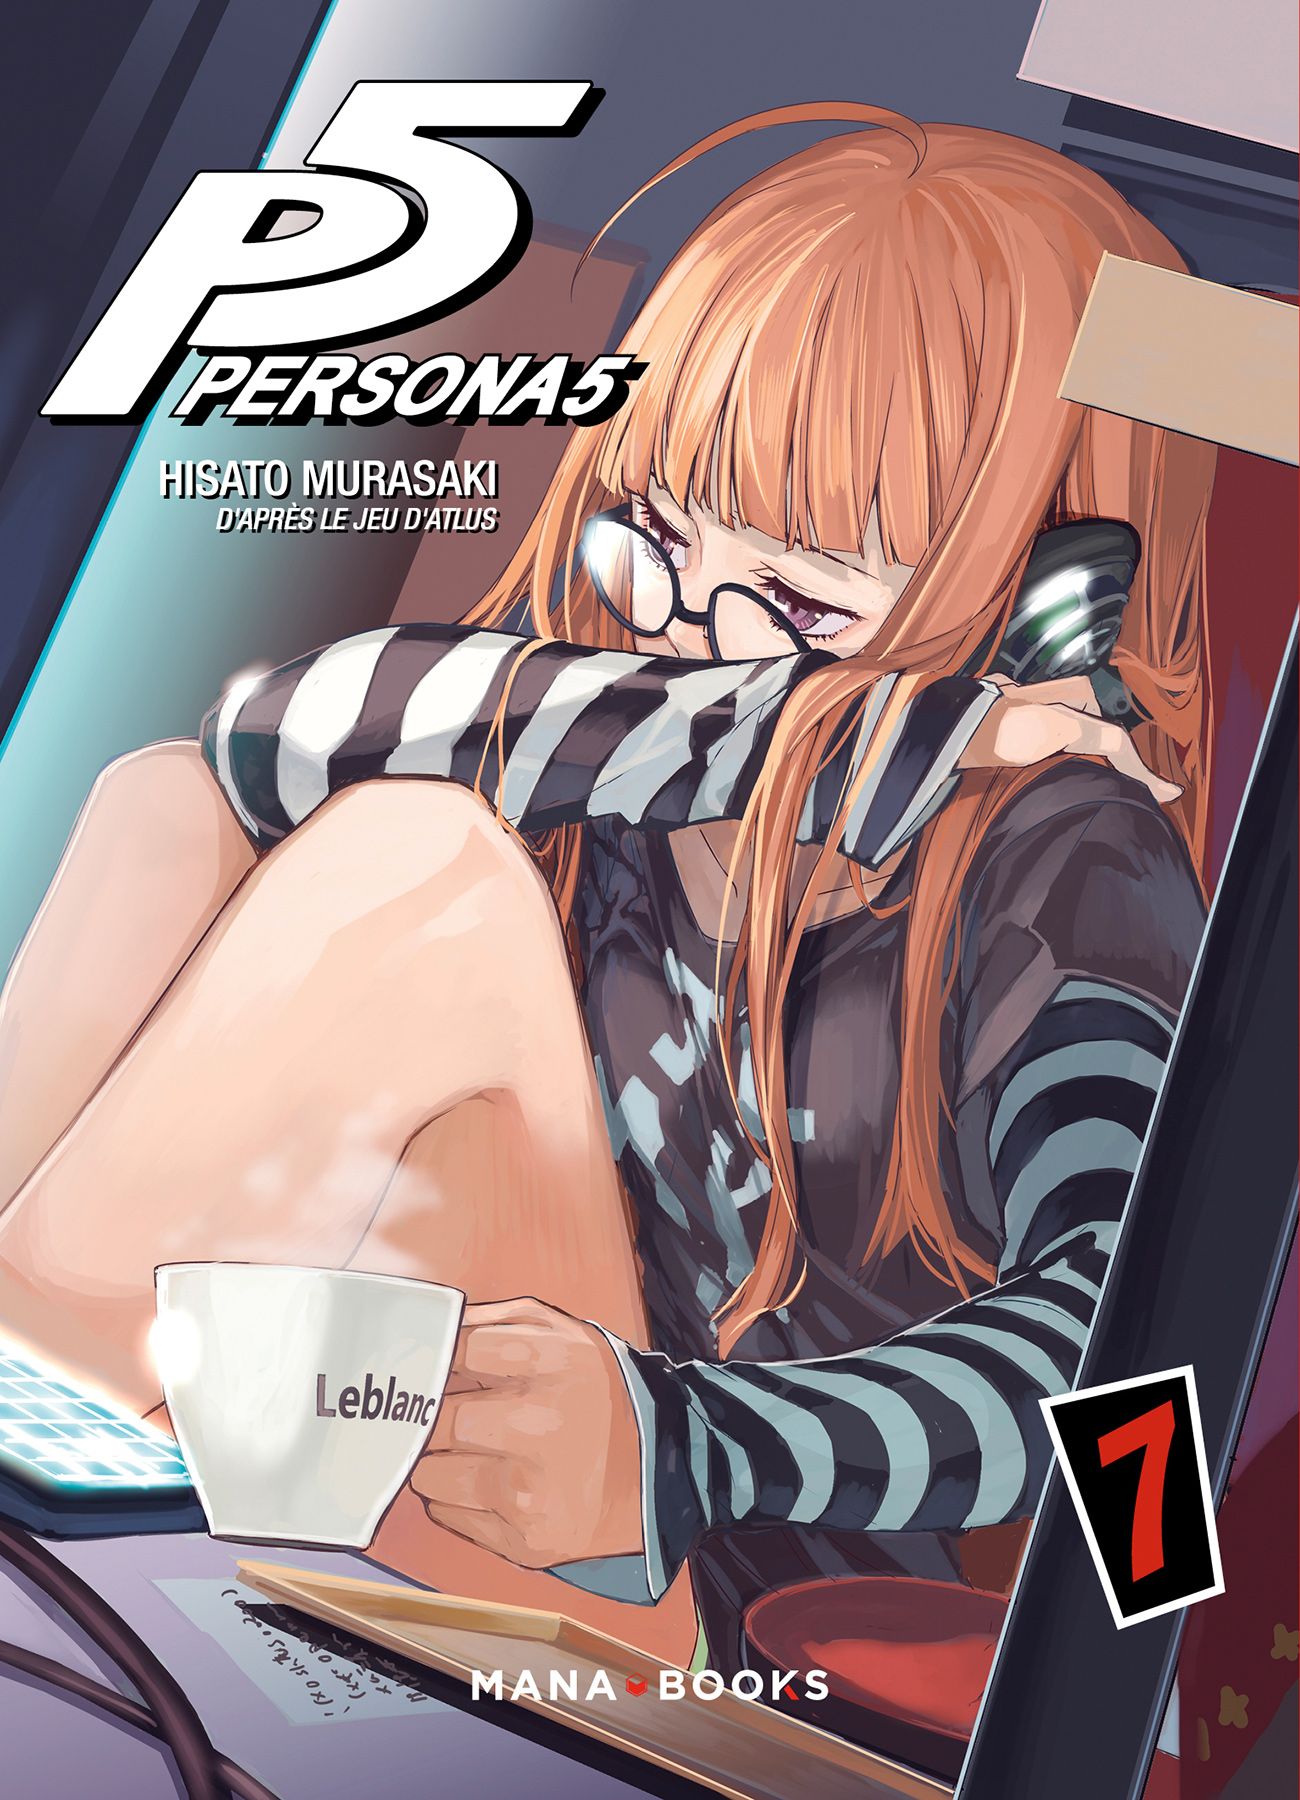 Sortie Manga au Québec JUILLET 2021 Persona-5-7-mana